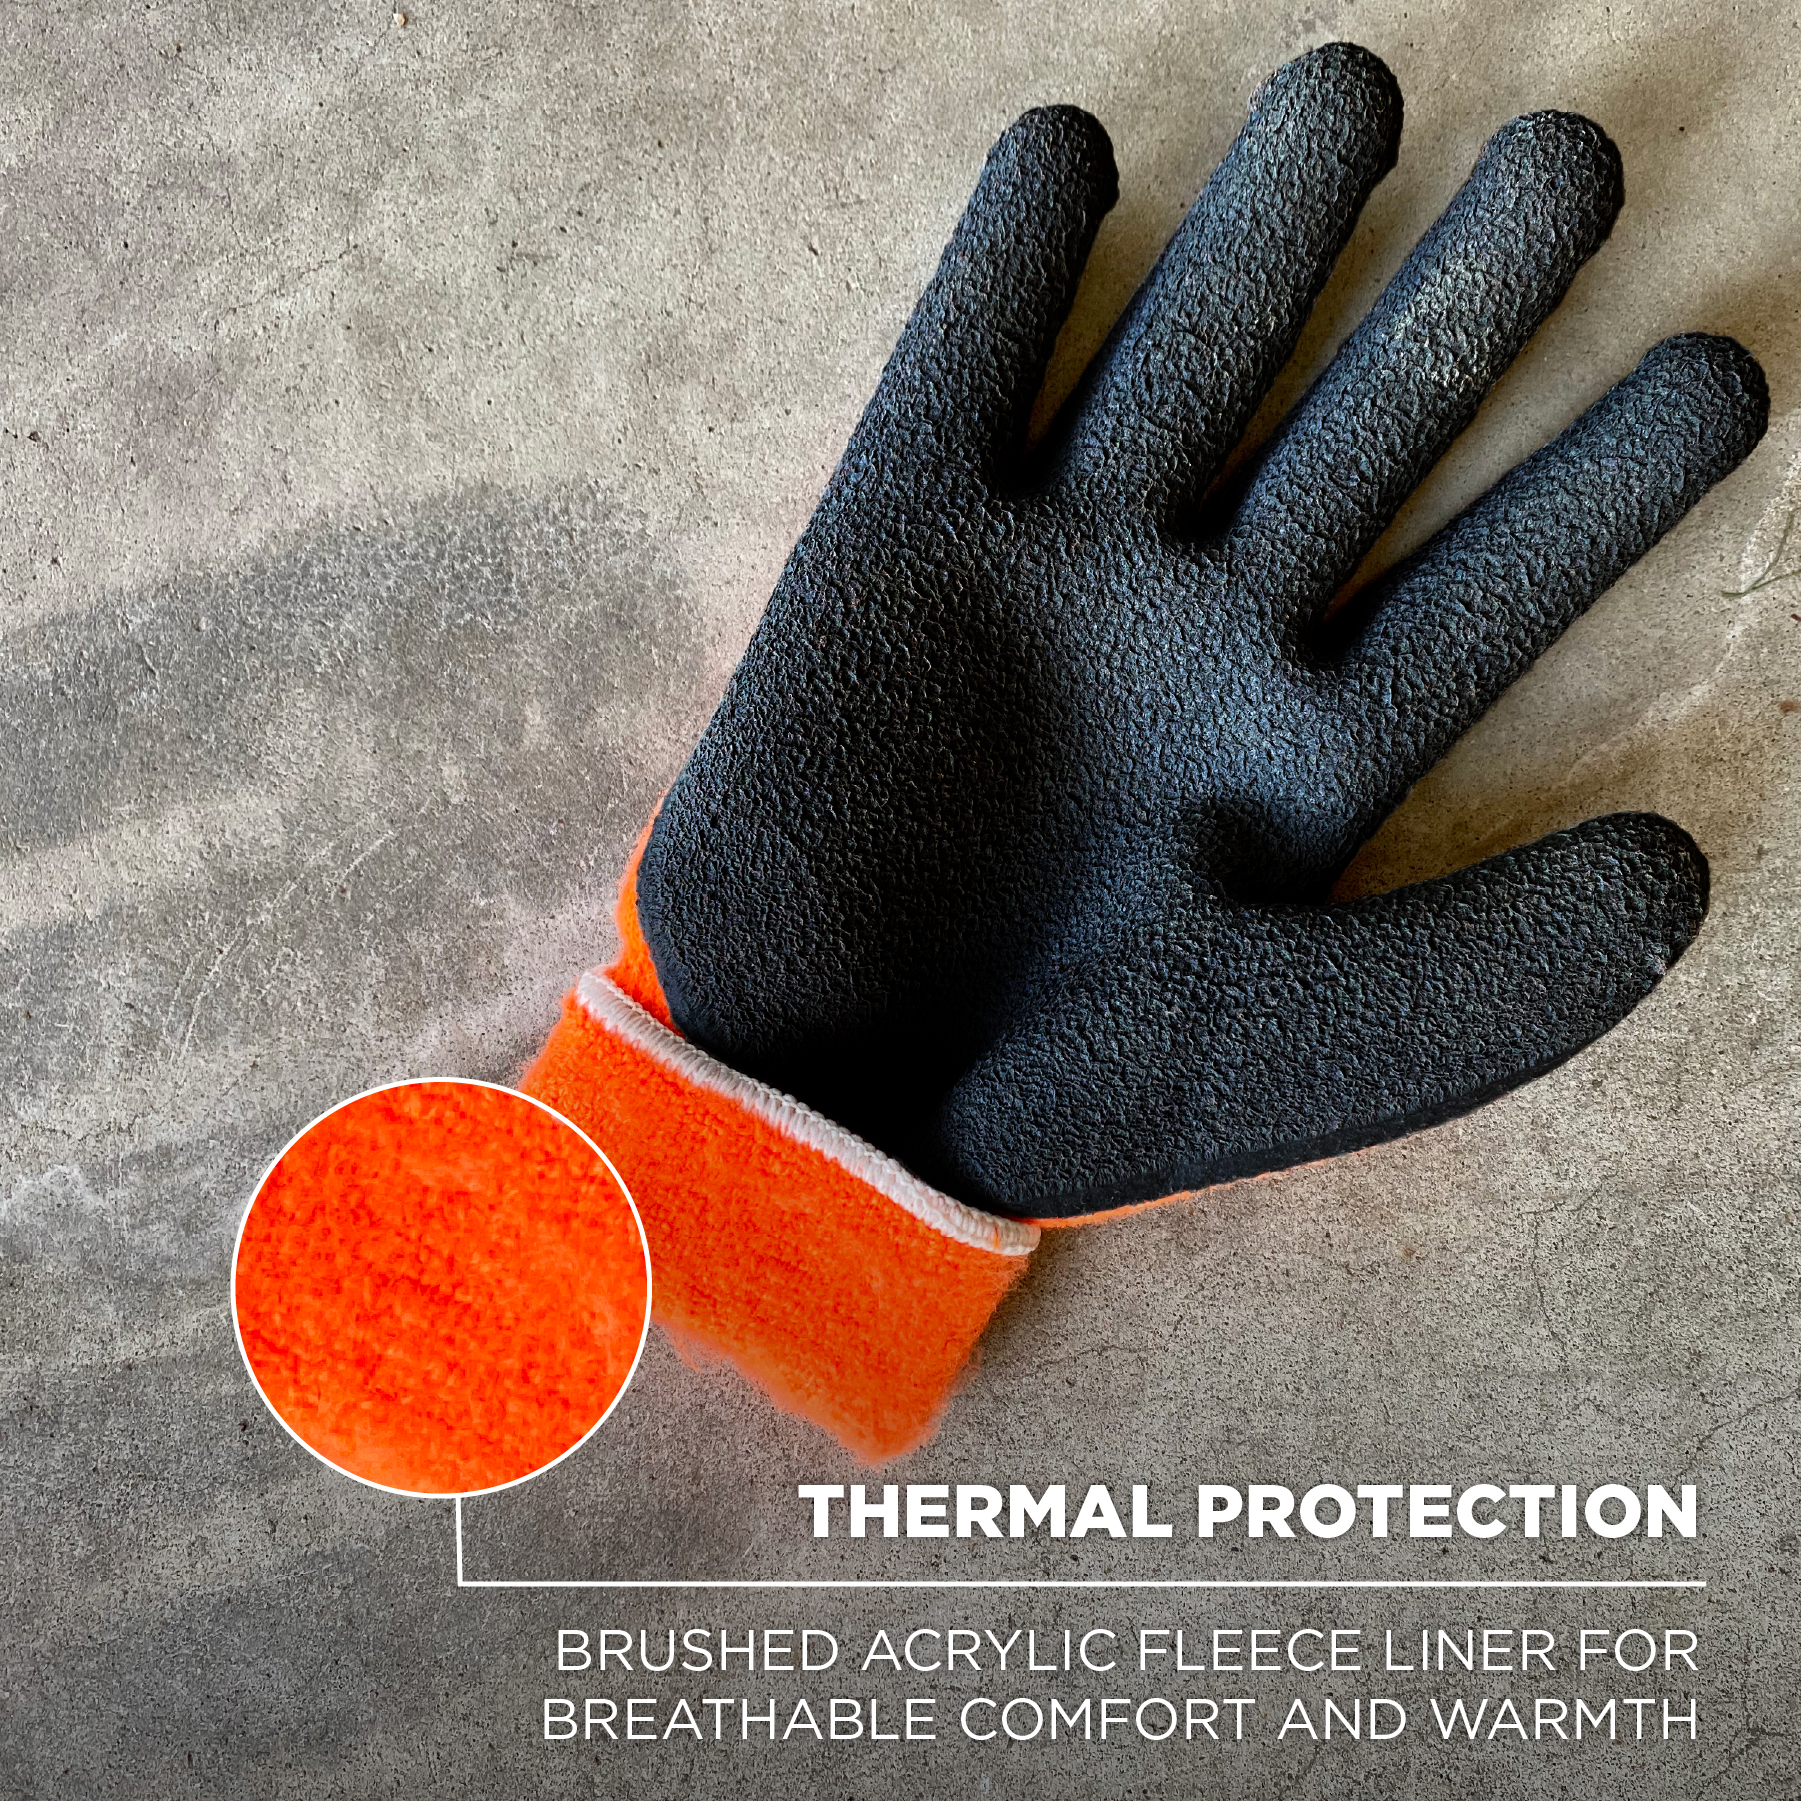 https://www.ergodyne.com/sites/default/files/product-images/17623-7401-coated-lightweight-winter-work-gloves-orange-thermal-protection_0.jpg